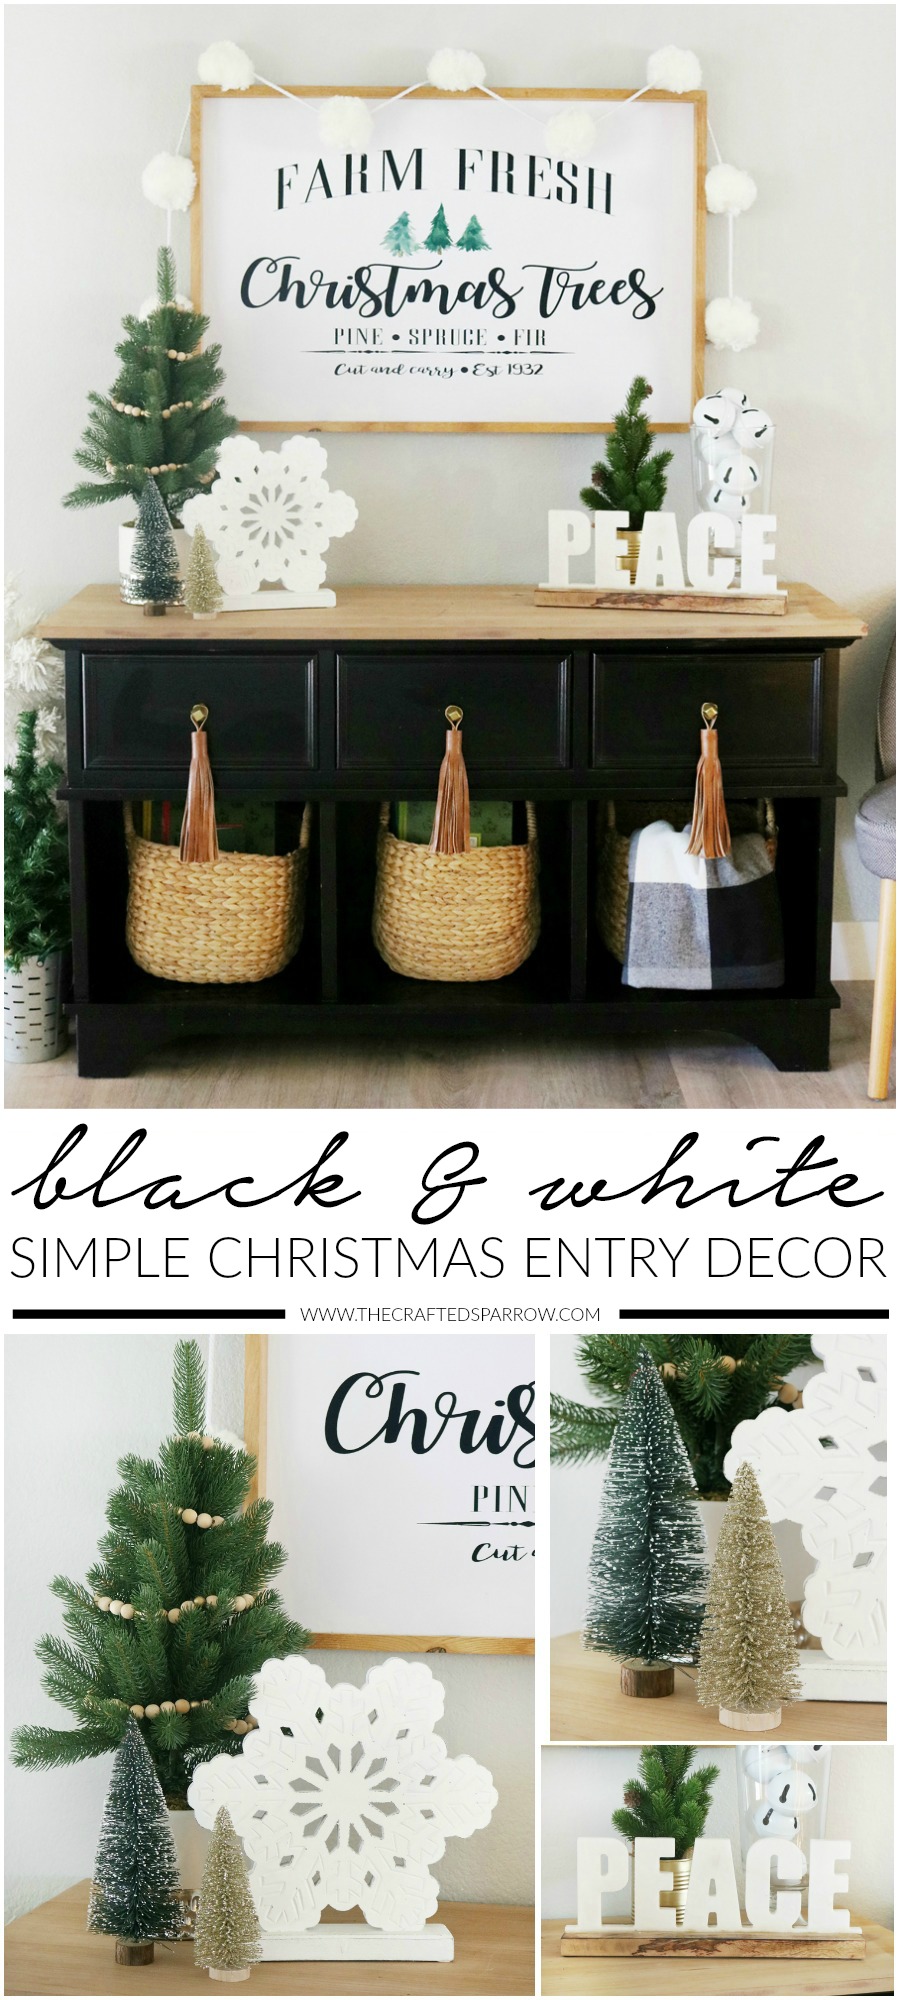 Black & White Simple Christmas Entry Decor